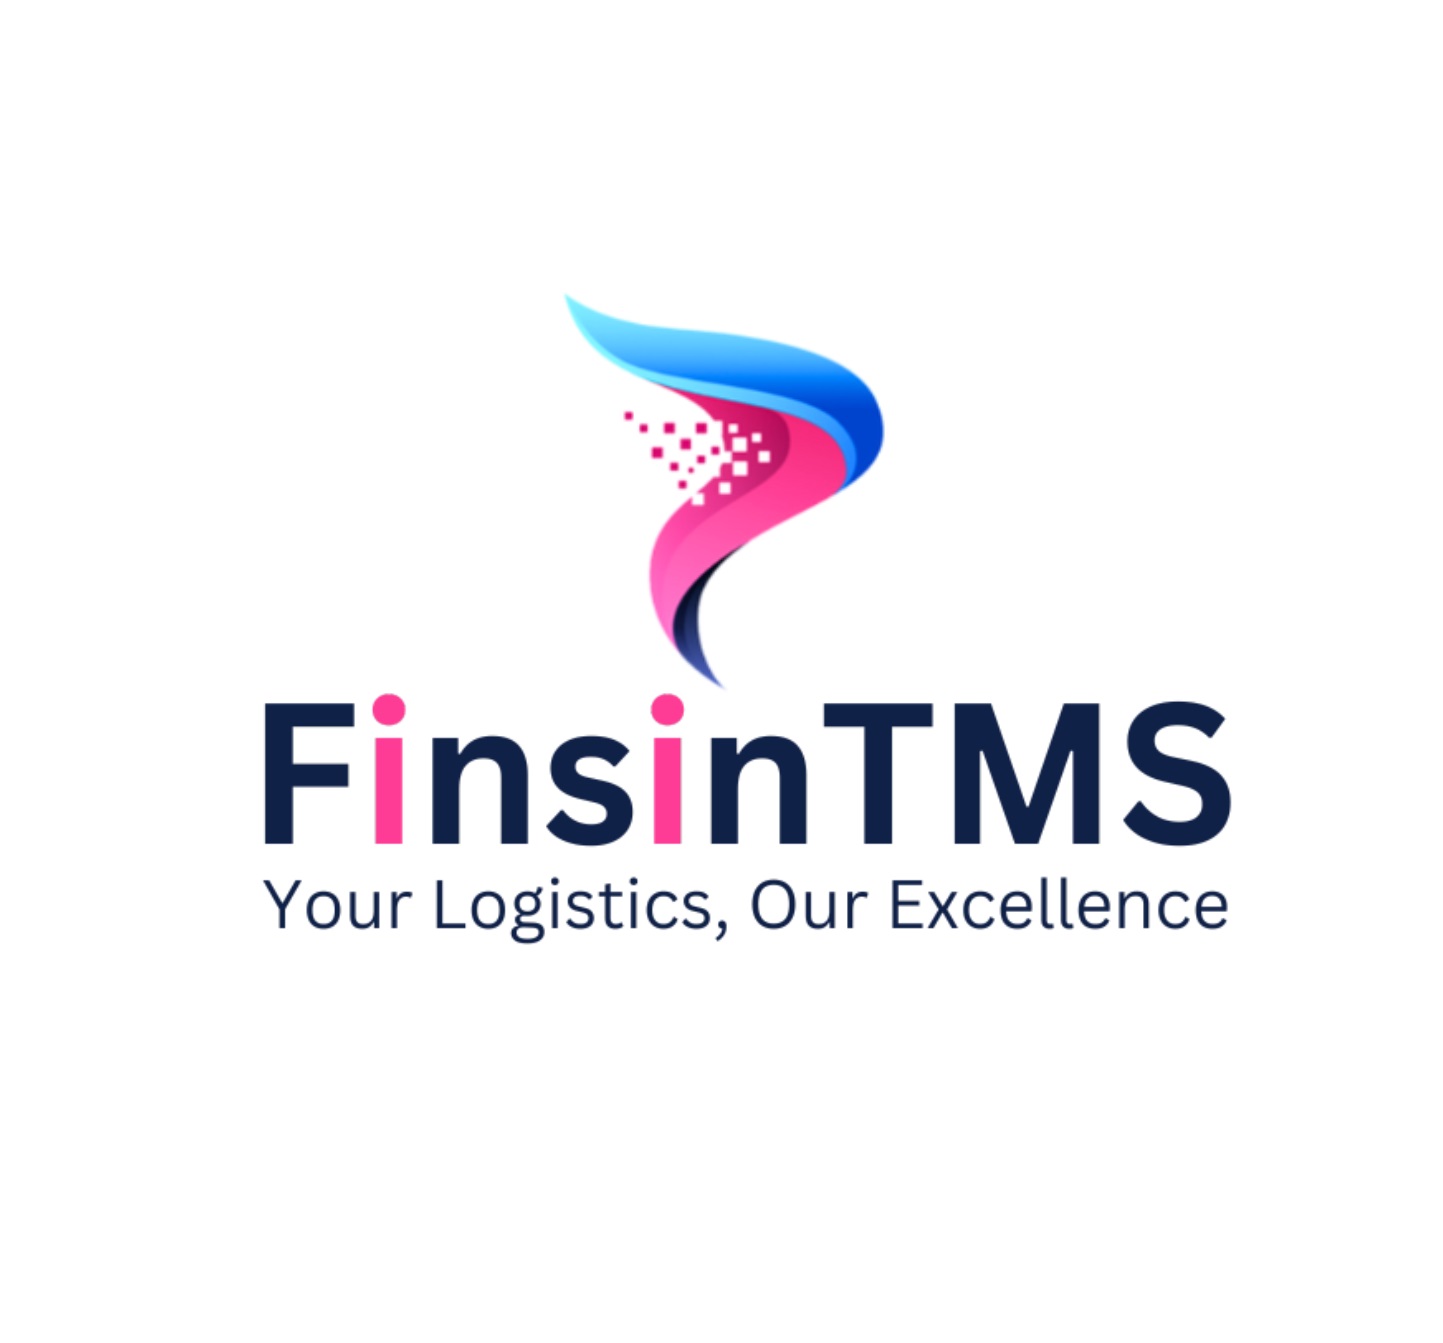 Company logo of FinsinTMS